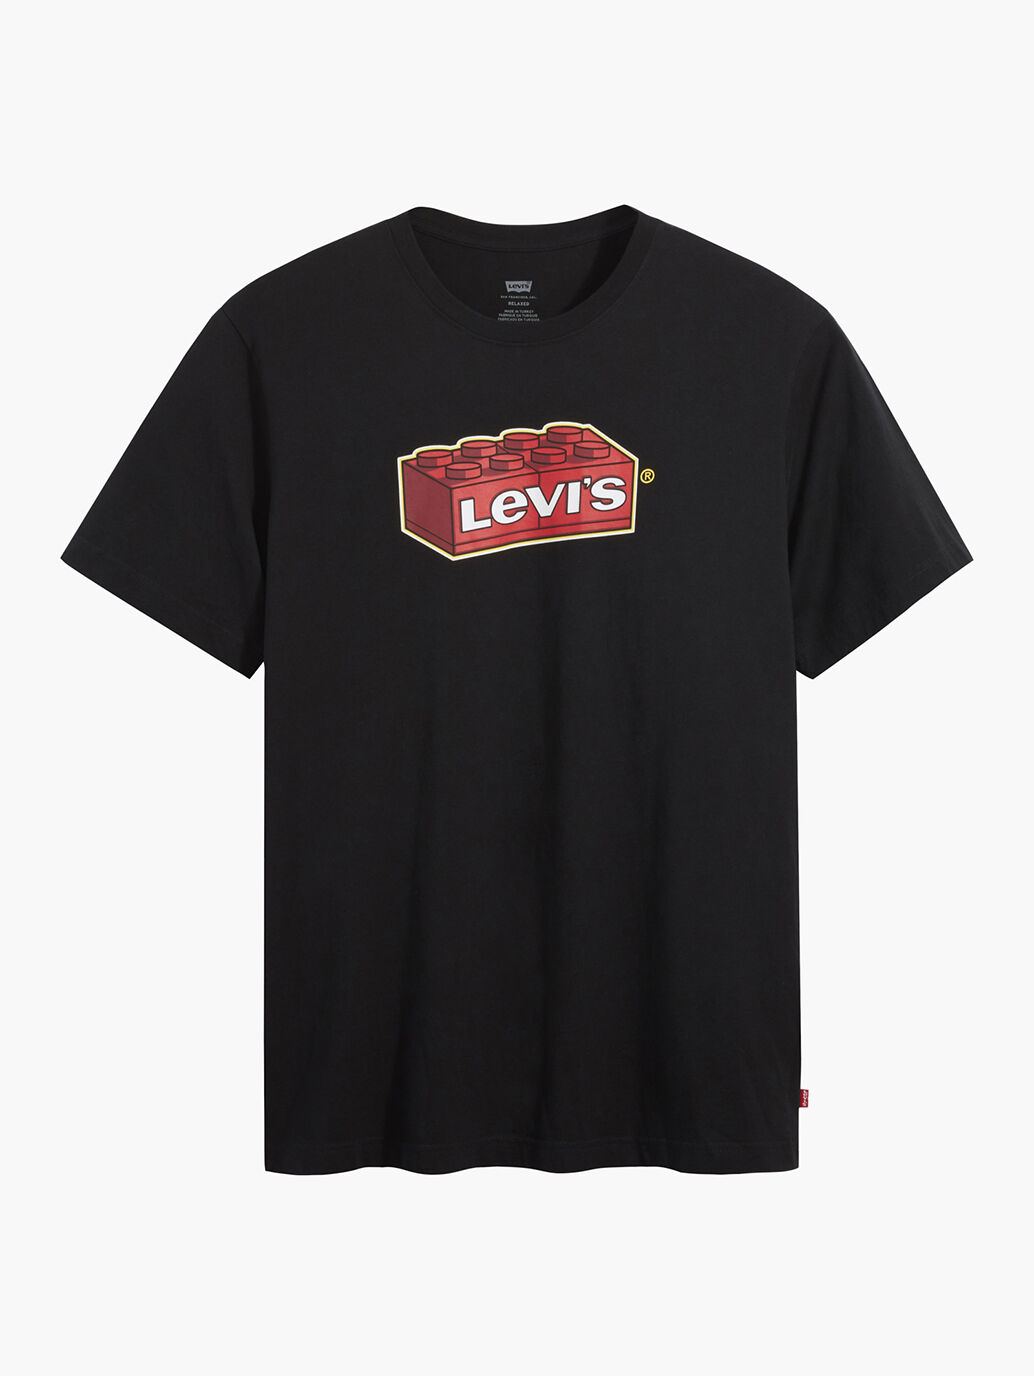 levis shirt style